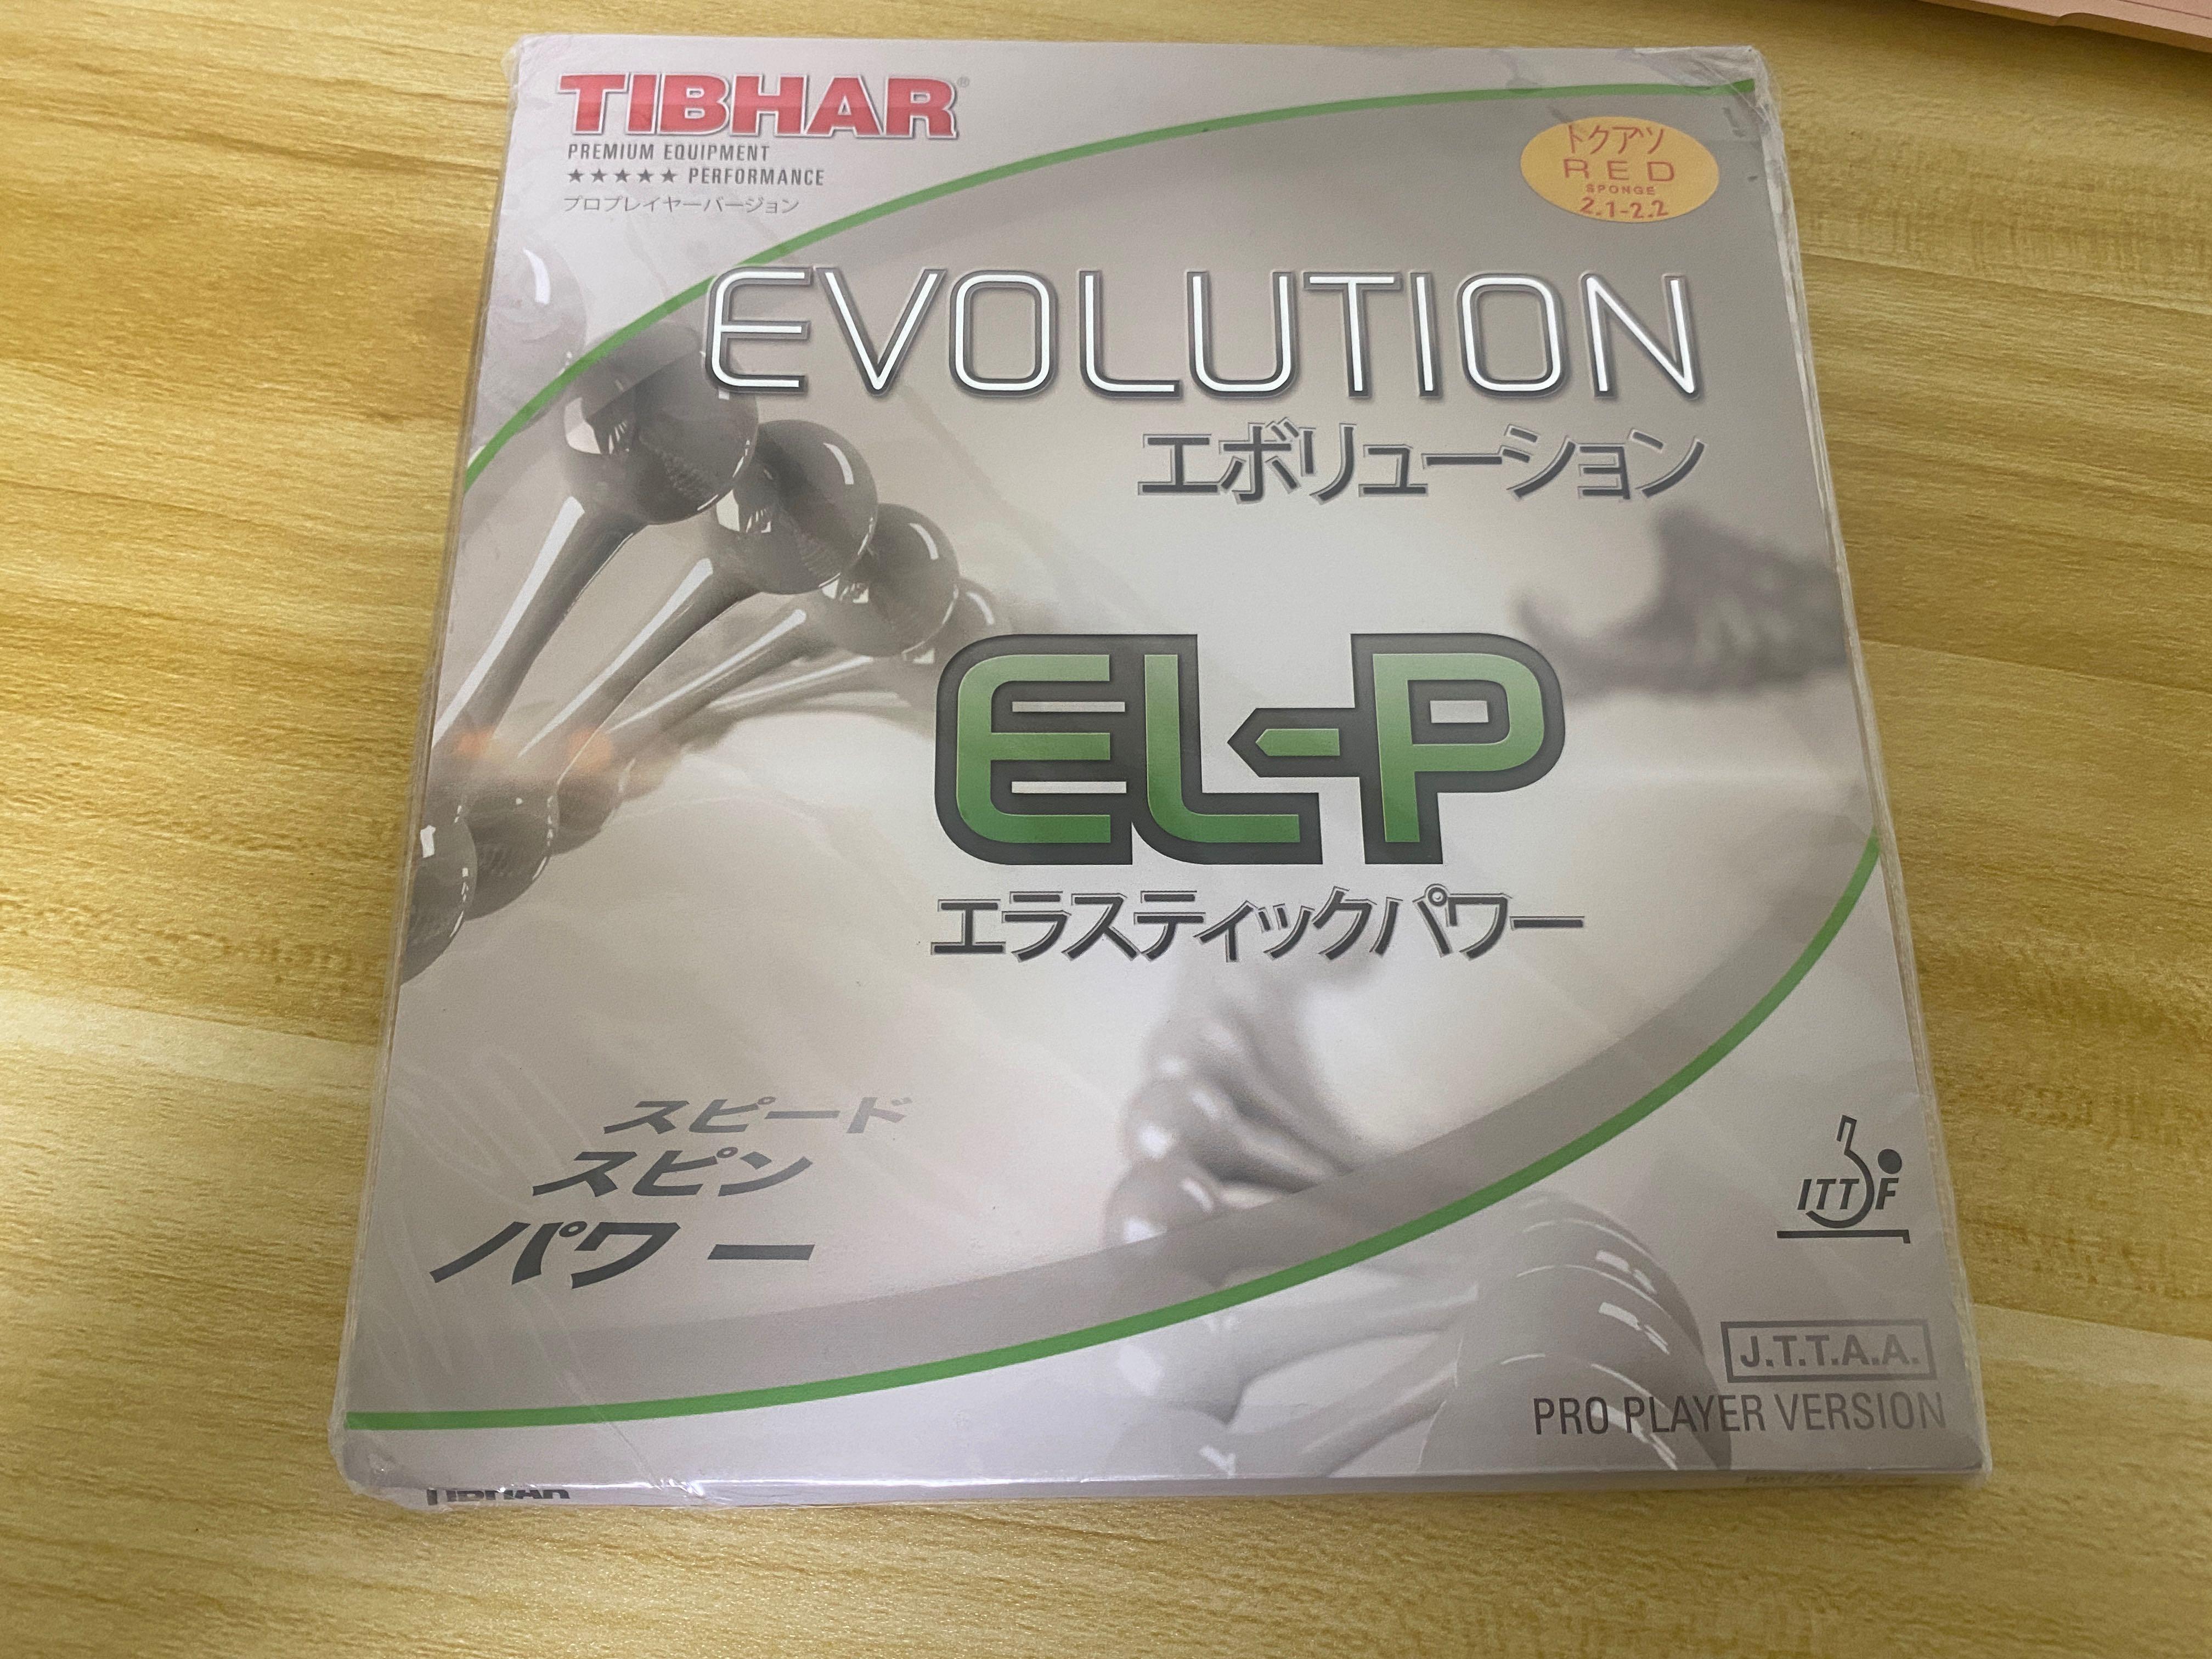 Tibhar Rubber Evolution EL-P 